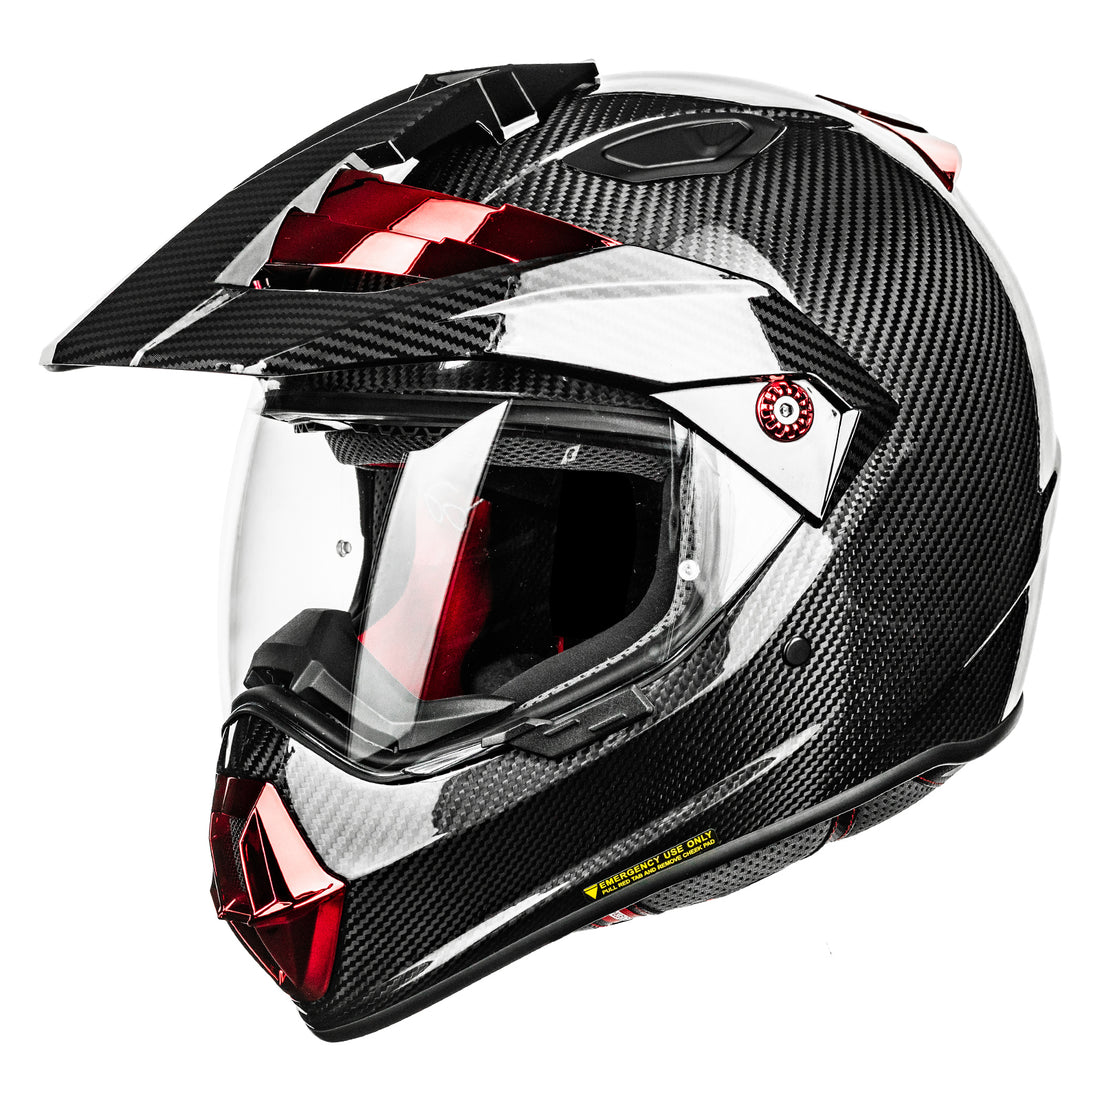 ILM Carbon Fiber Snell M2020D Full Face Motorcycle Adventure Helmet Model L13